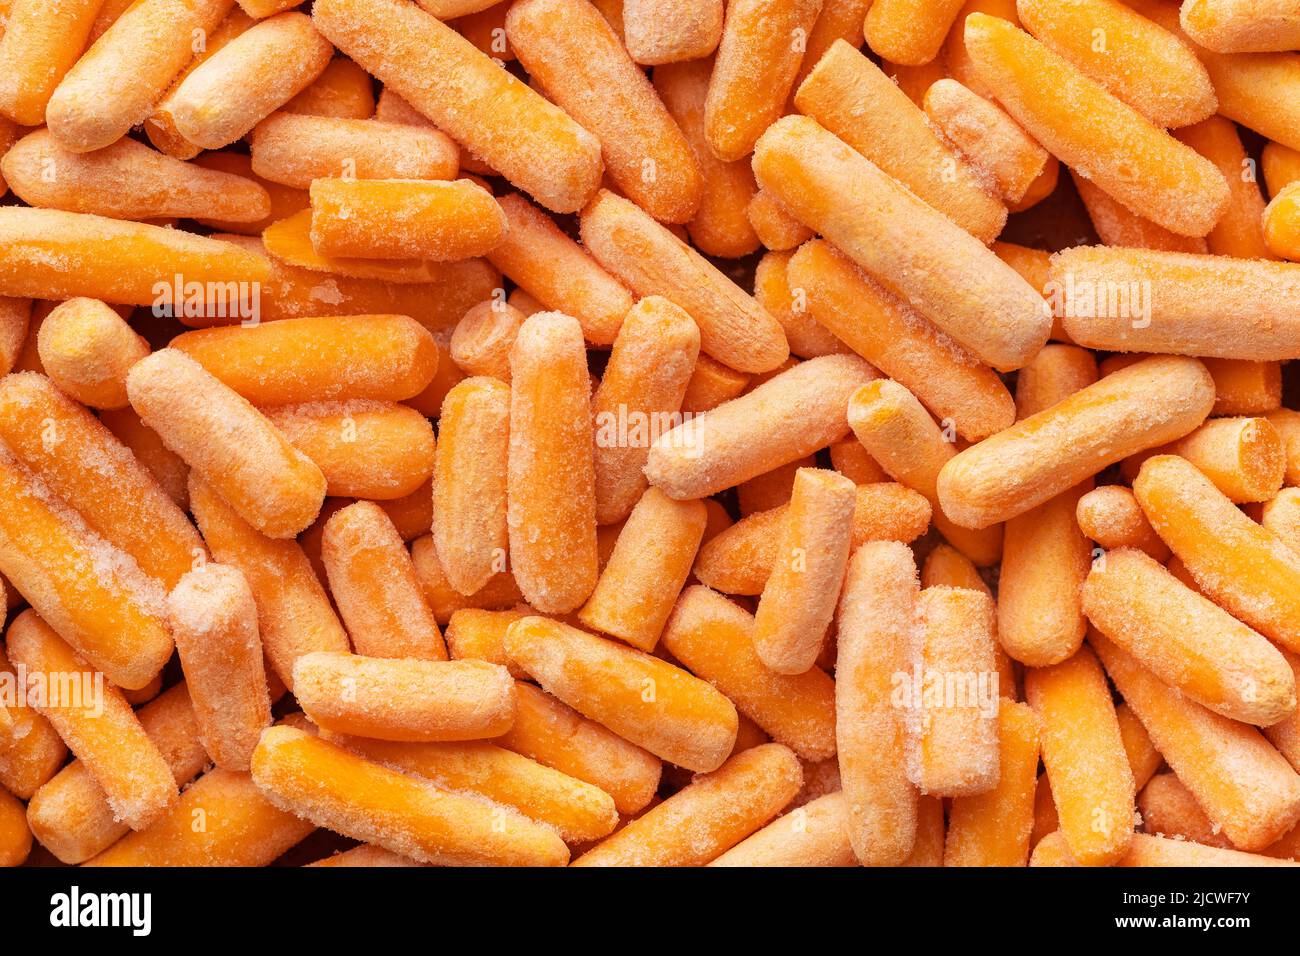 Frozen baby carrot vegetable. Mini orange carrots. Top view. Stock Photo